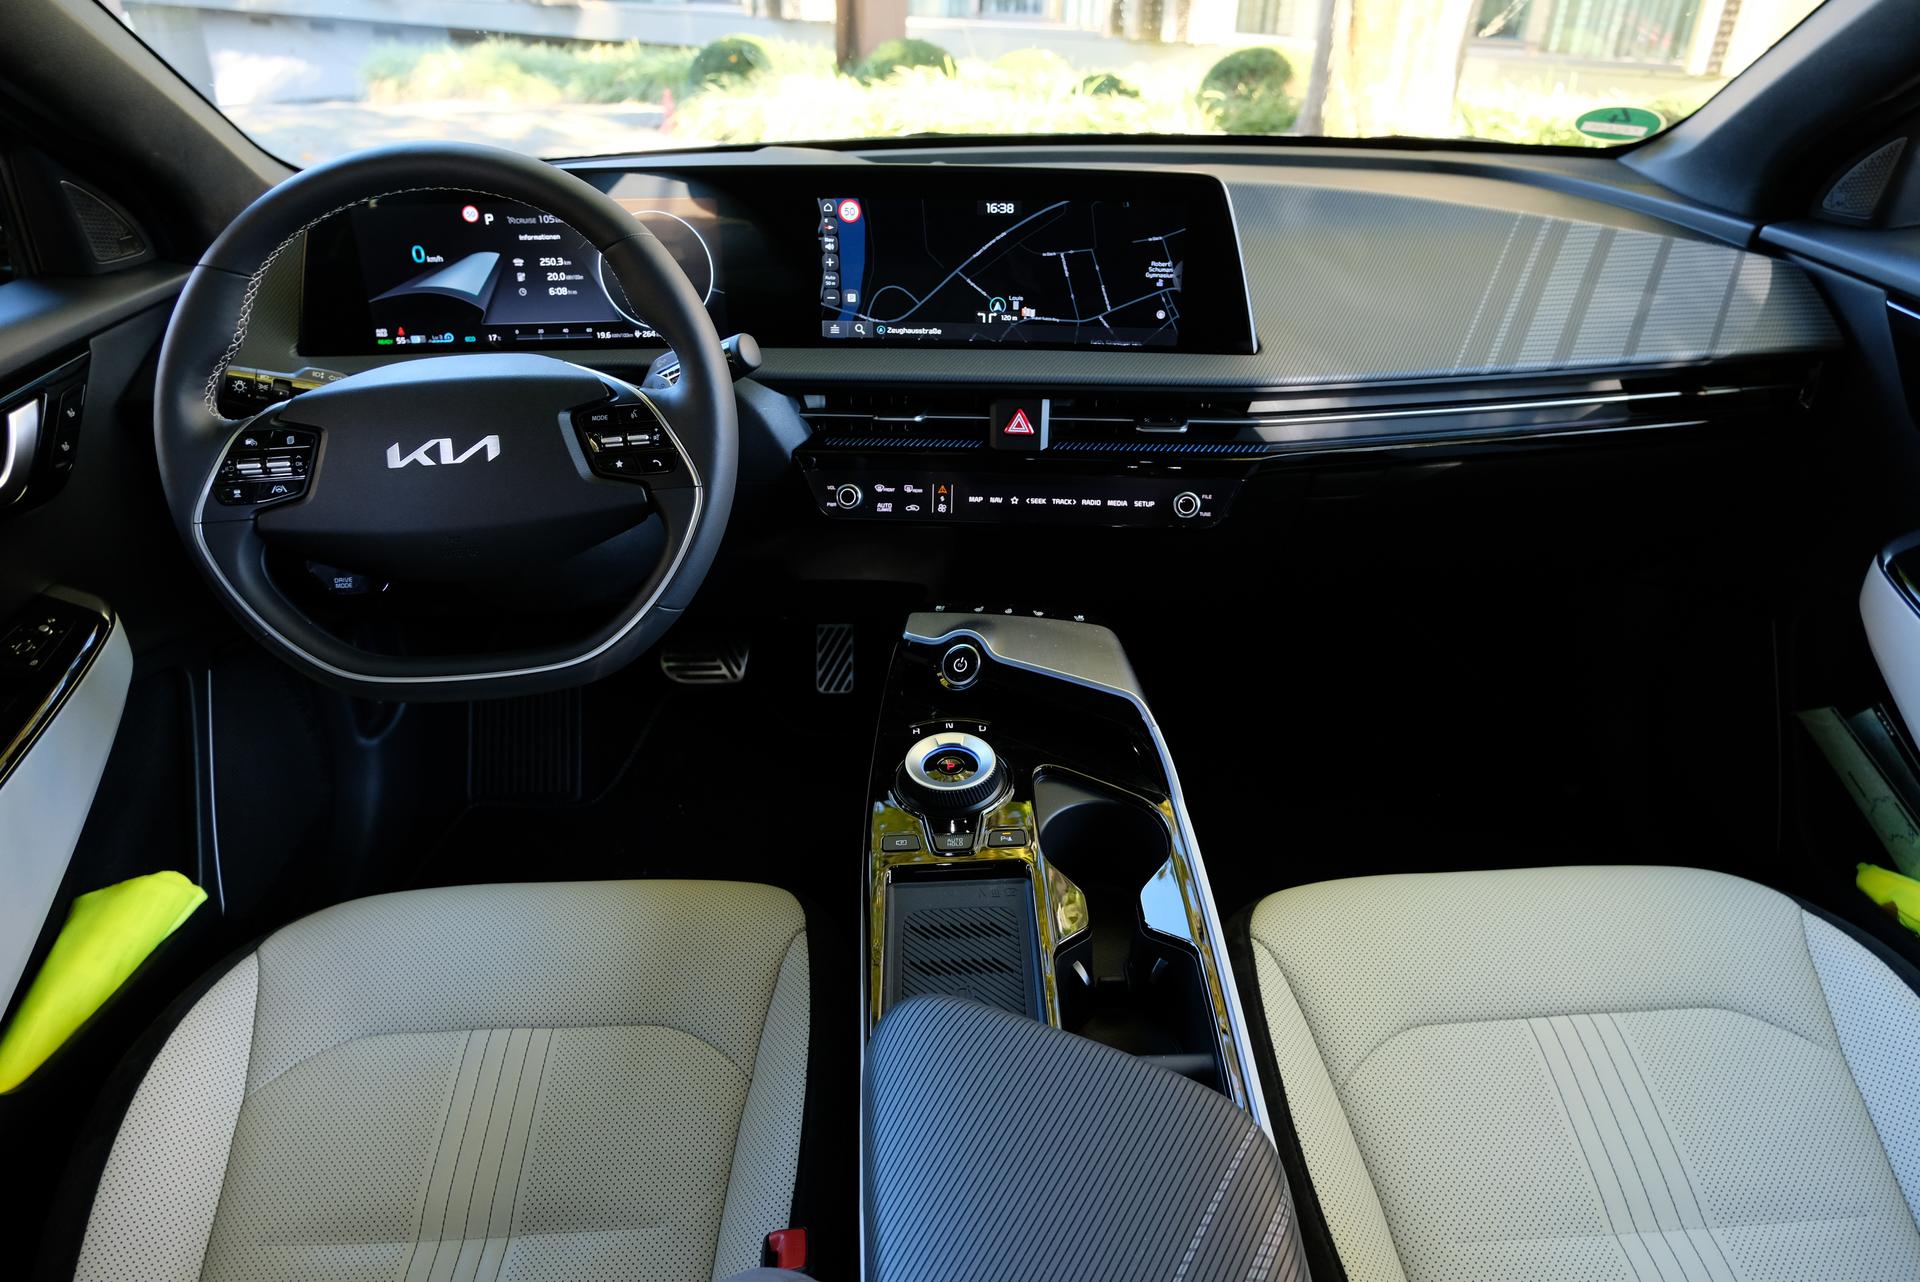 Kia EV6 Innenraum das Panoramadisplay im Touchscreen für das
Infotainment- und das Navigationssystem